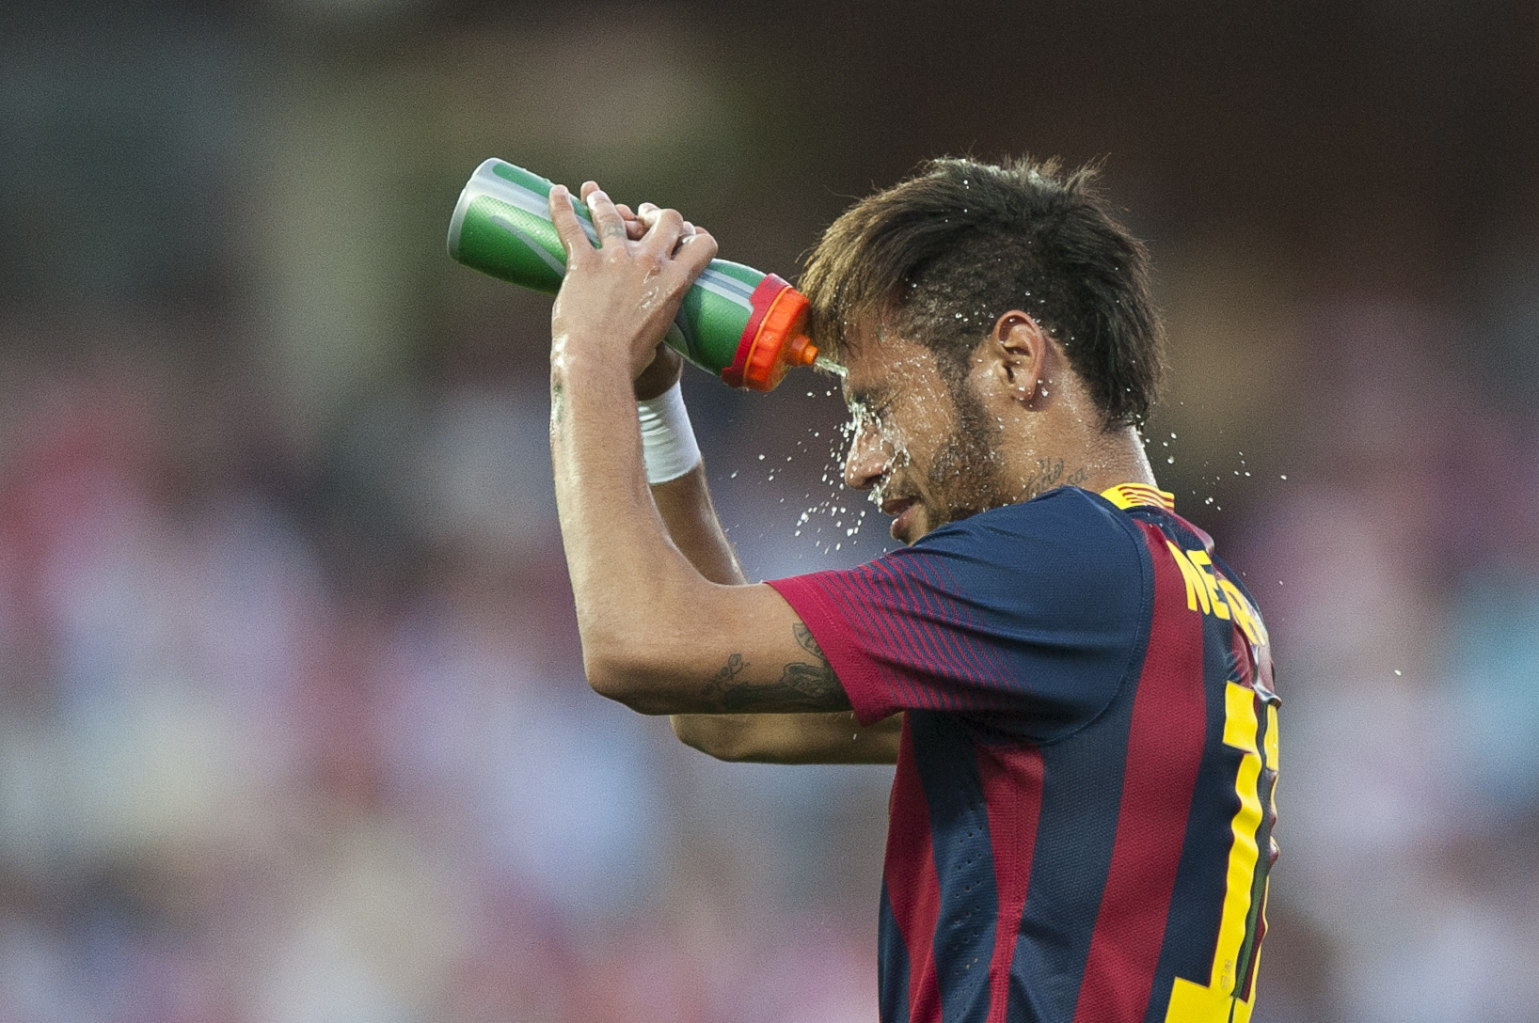 Neymar refreshing his face with Gatorade